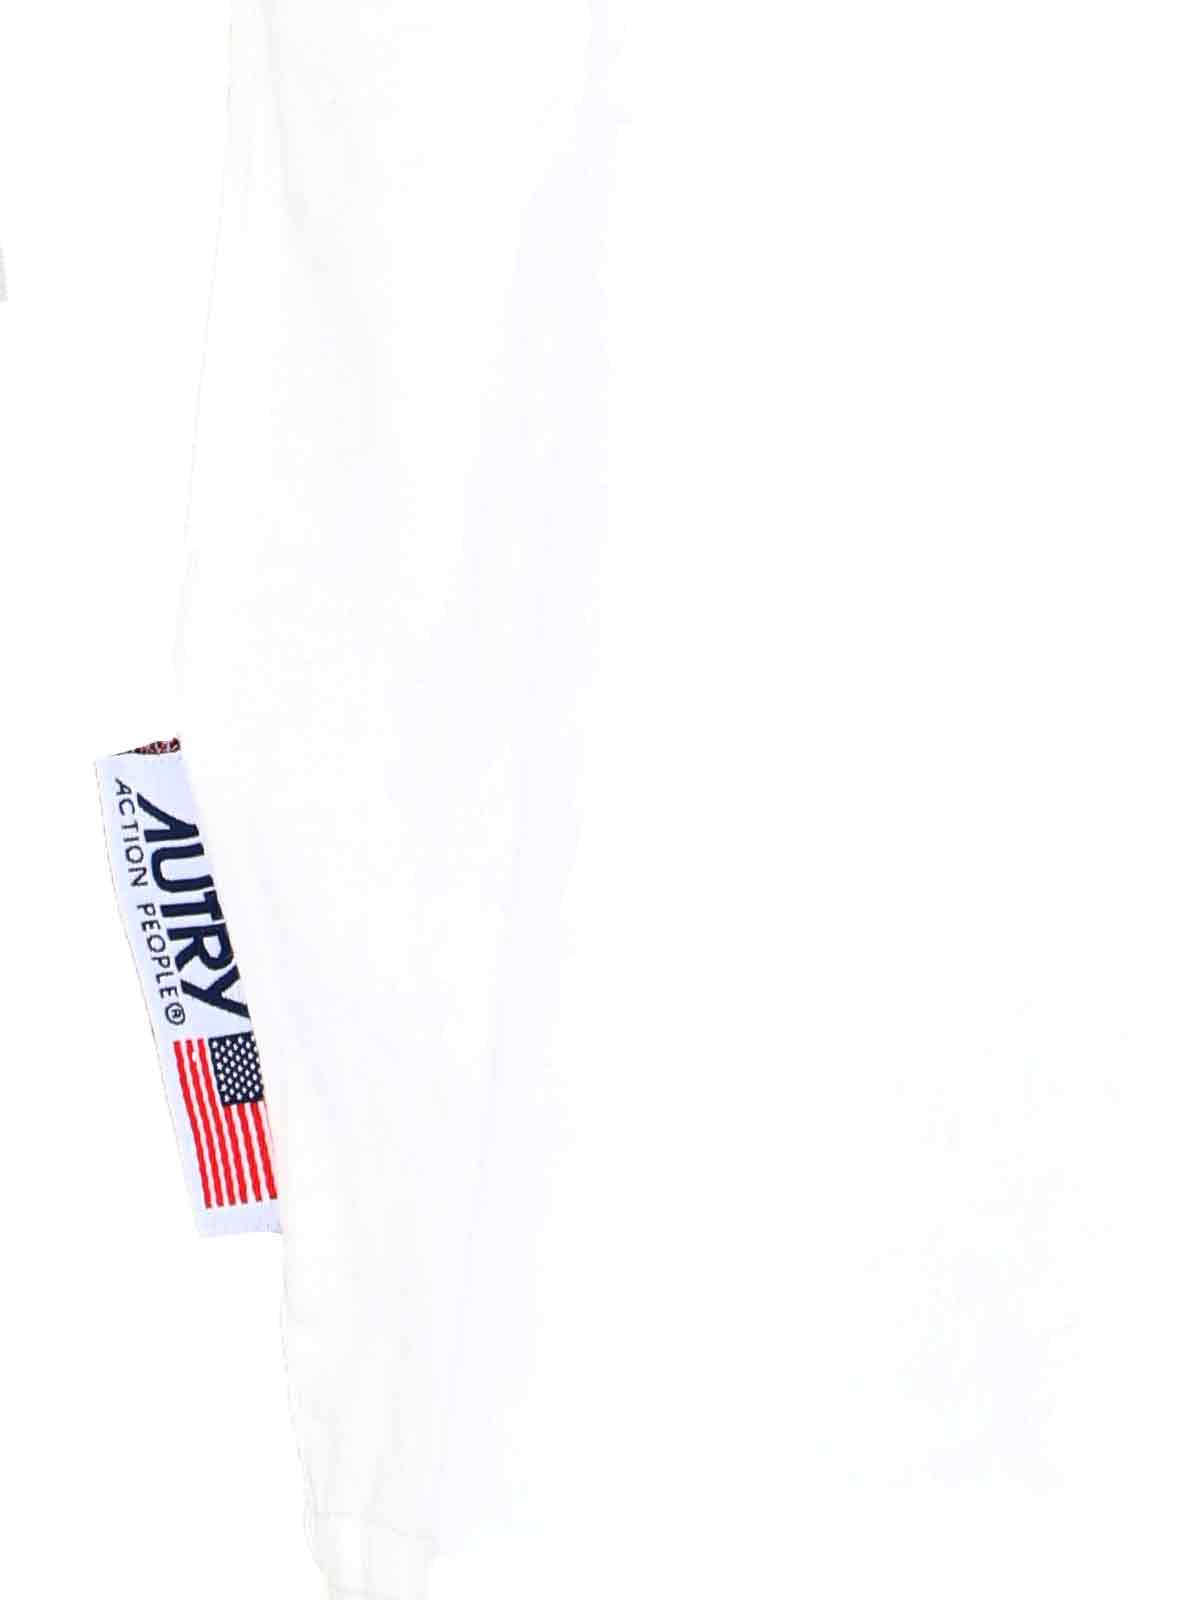 Shop Autry Logo T-shirt In White